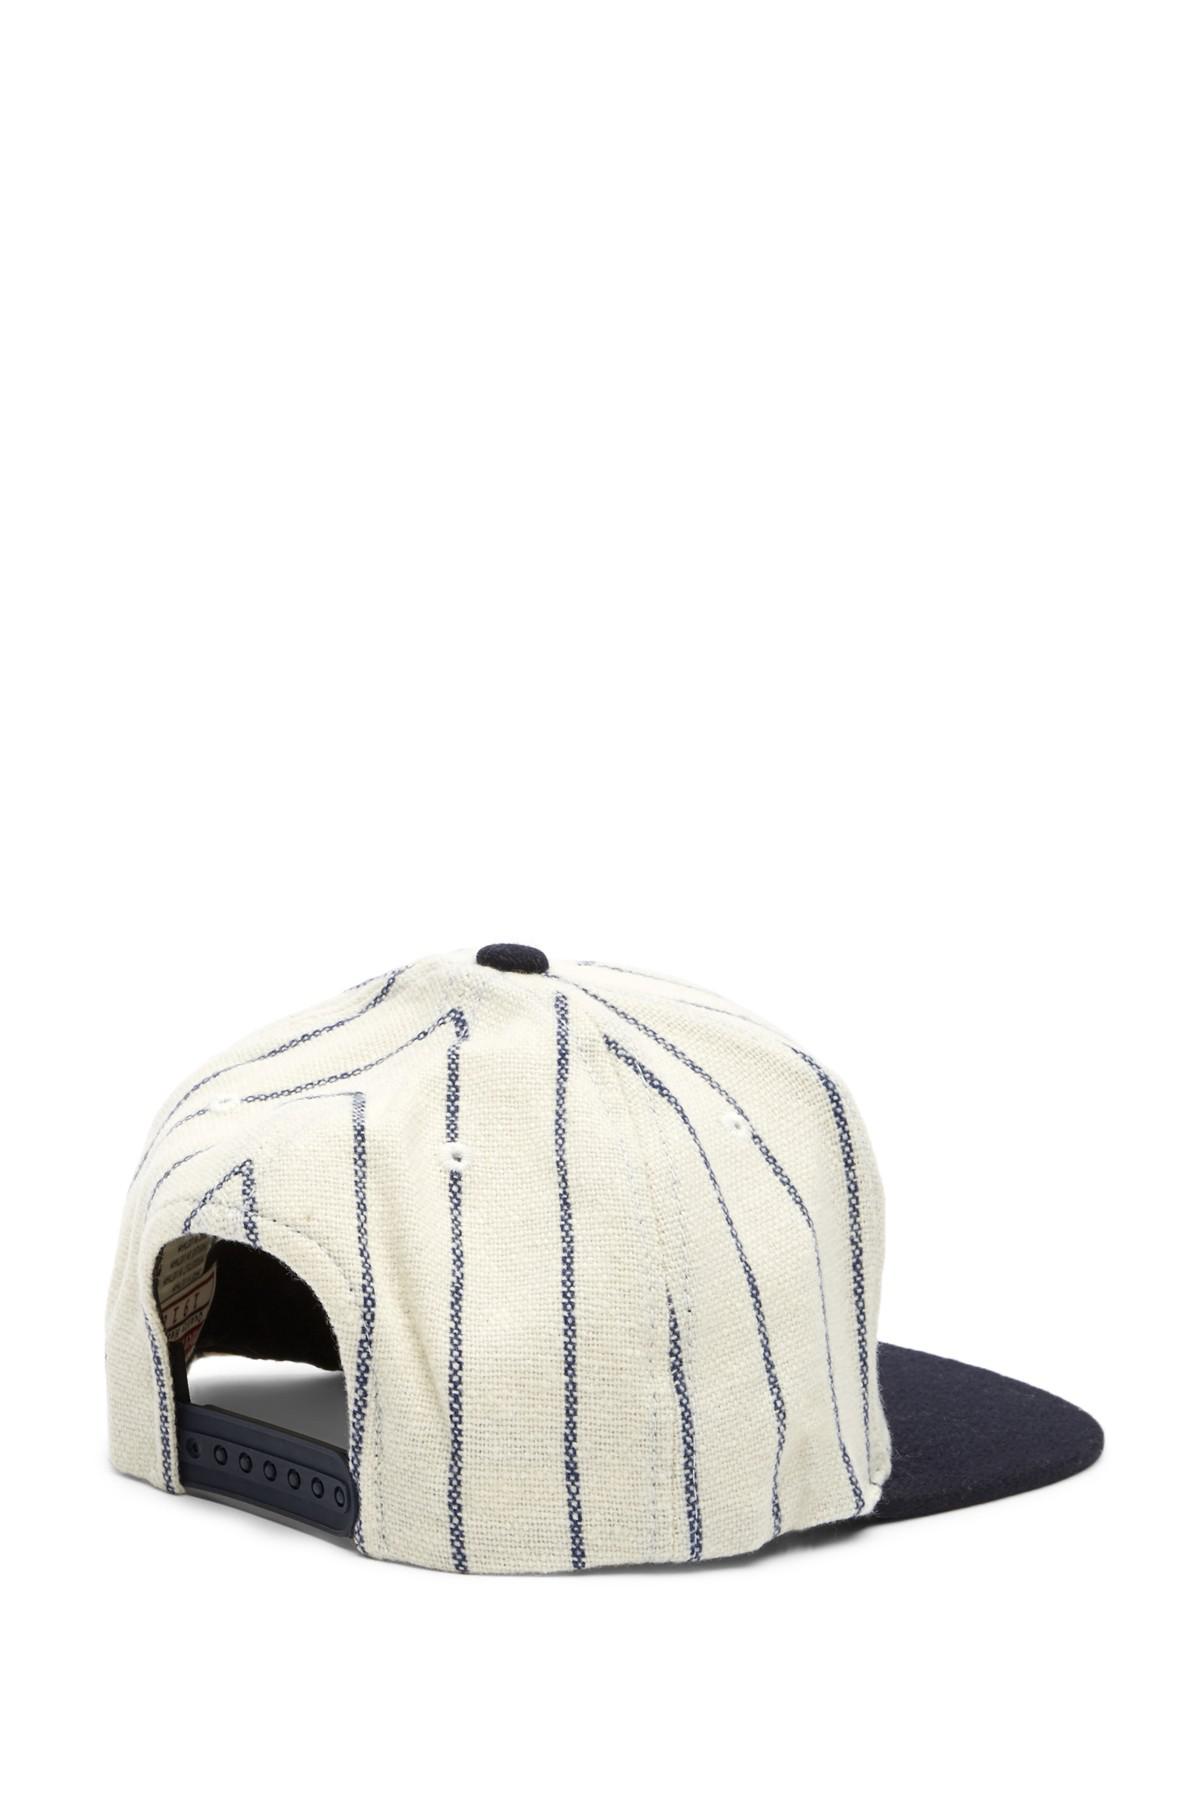 New Era New York Yankees Pinstripe Baseball Hat in Navy, Men's at Urban Outfitters